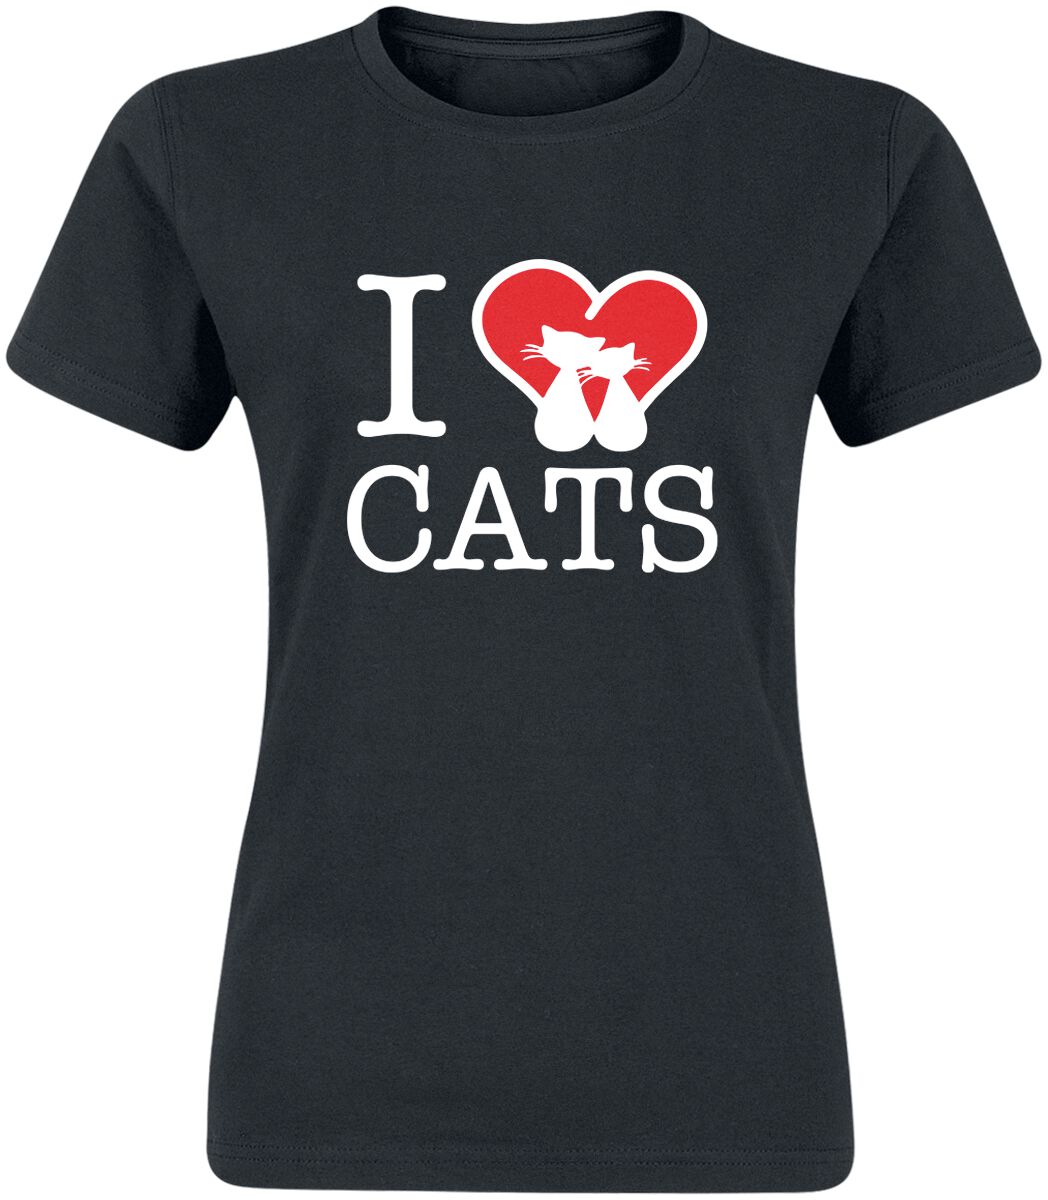 I Love Cats T Shirt Emp